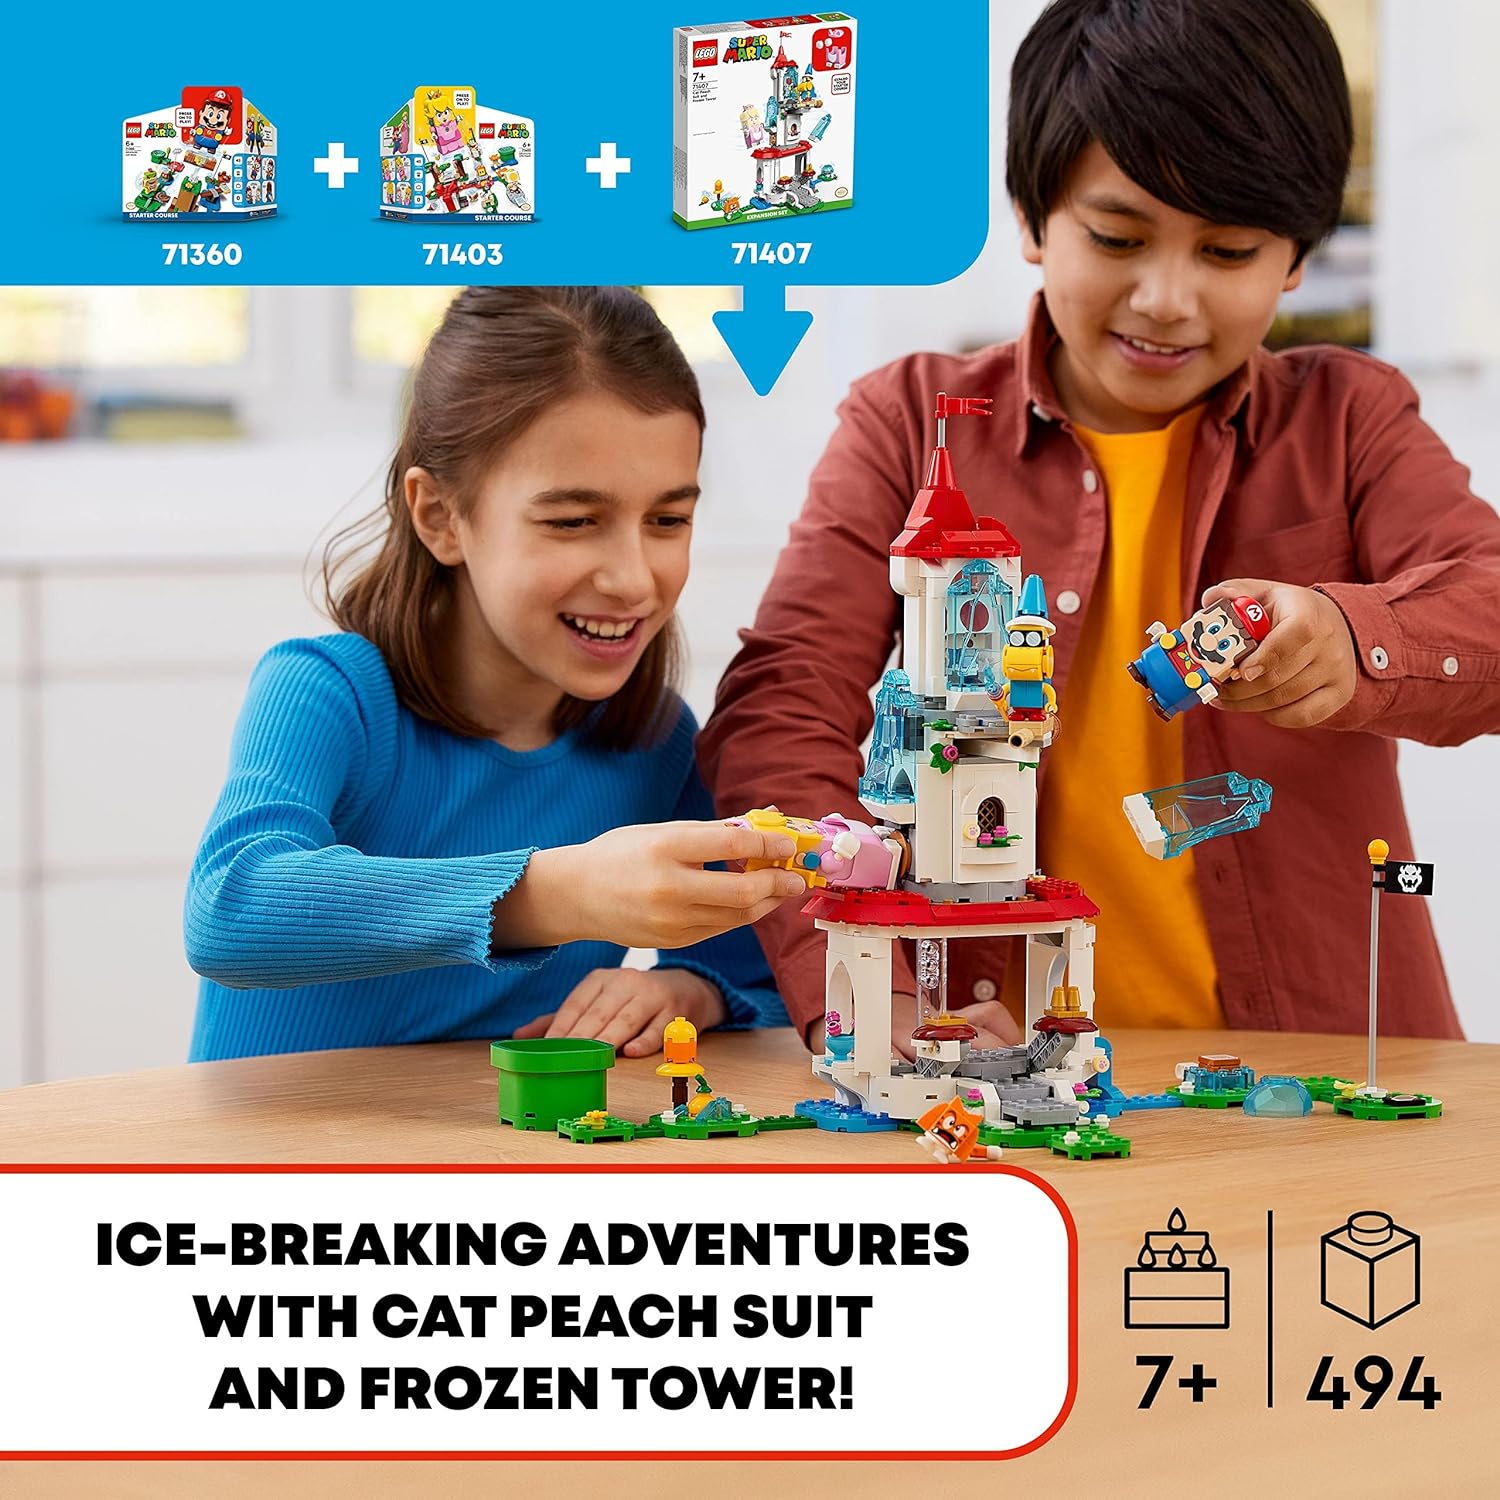 Lego 71407 Super Mario Cat Peach Suit and Frozen Tower Expansion Set